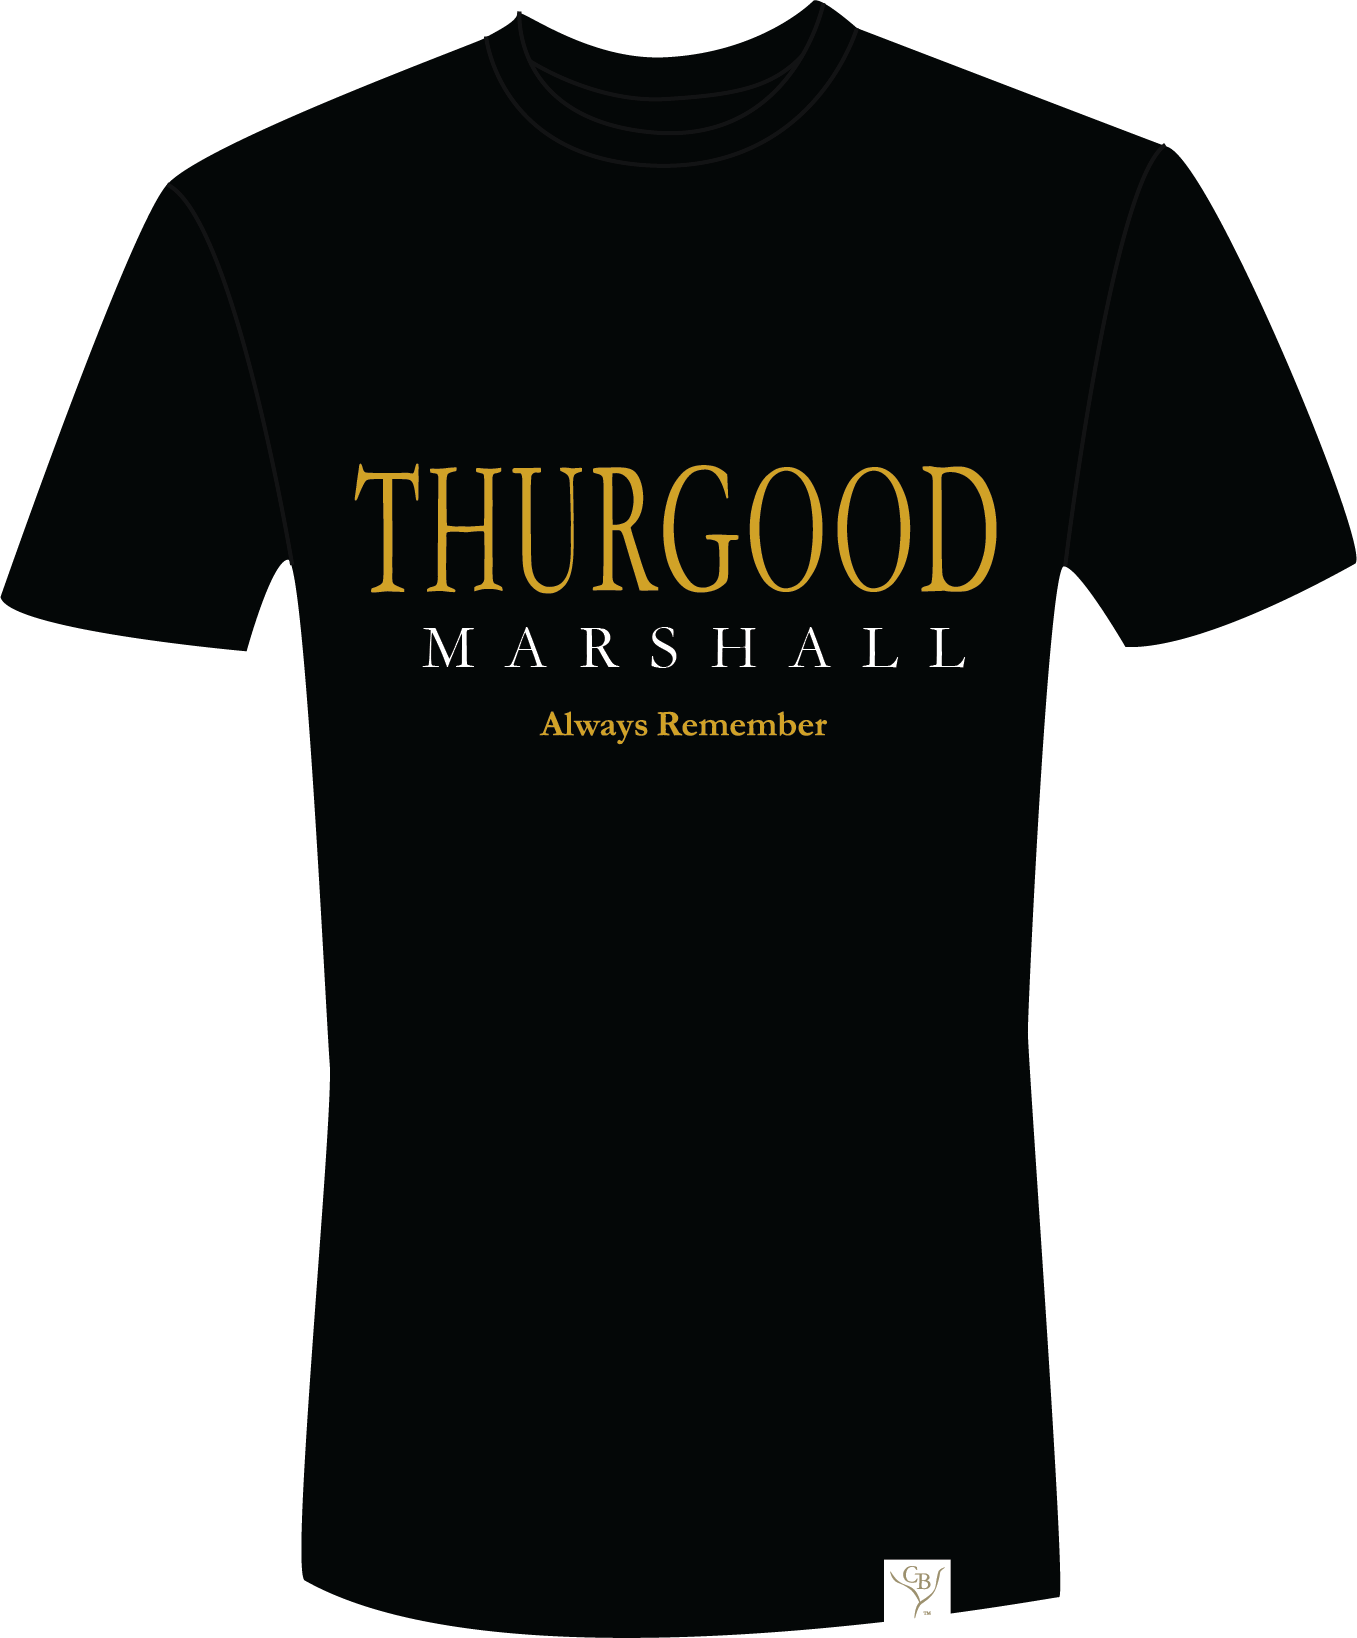 The Thurgood 9